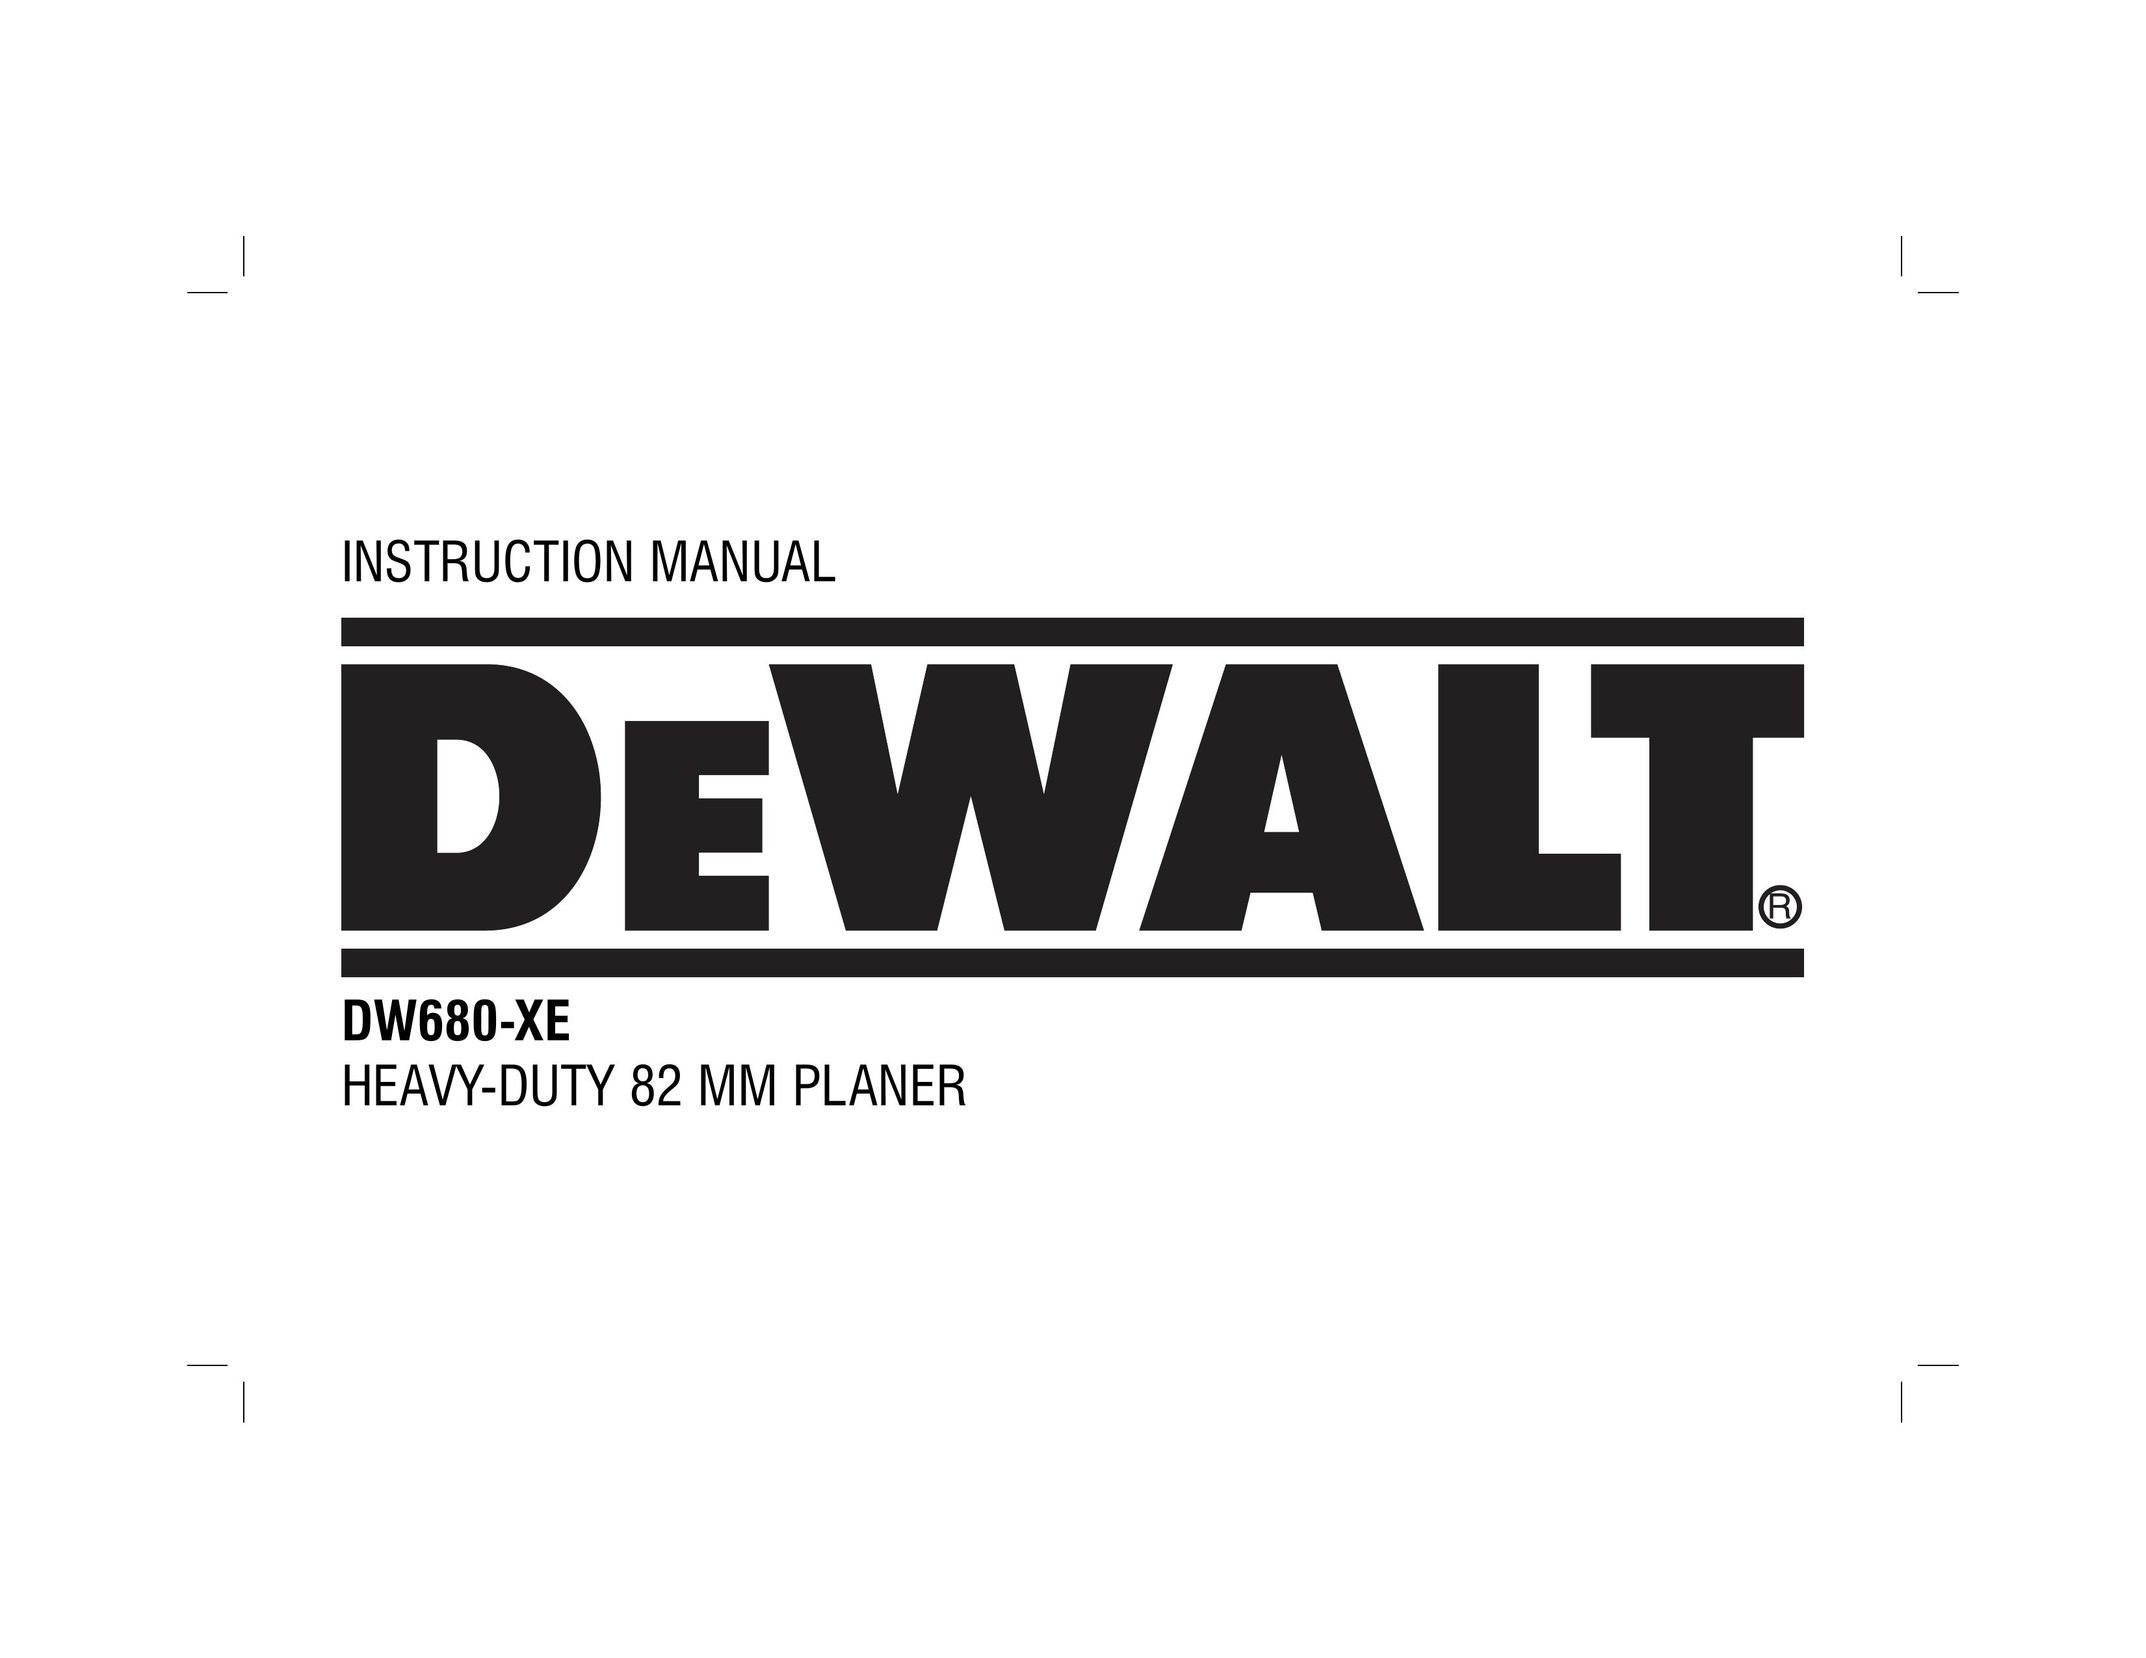 DeWalt DW680-XE Planer User Manual